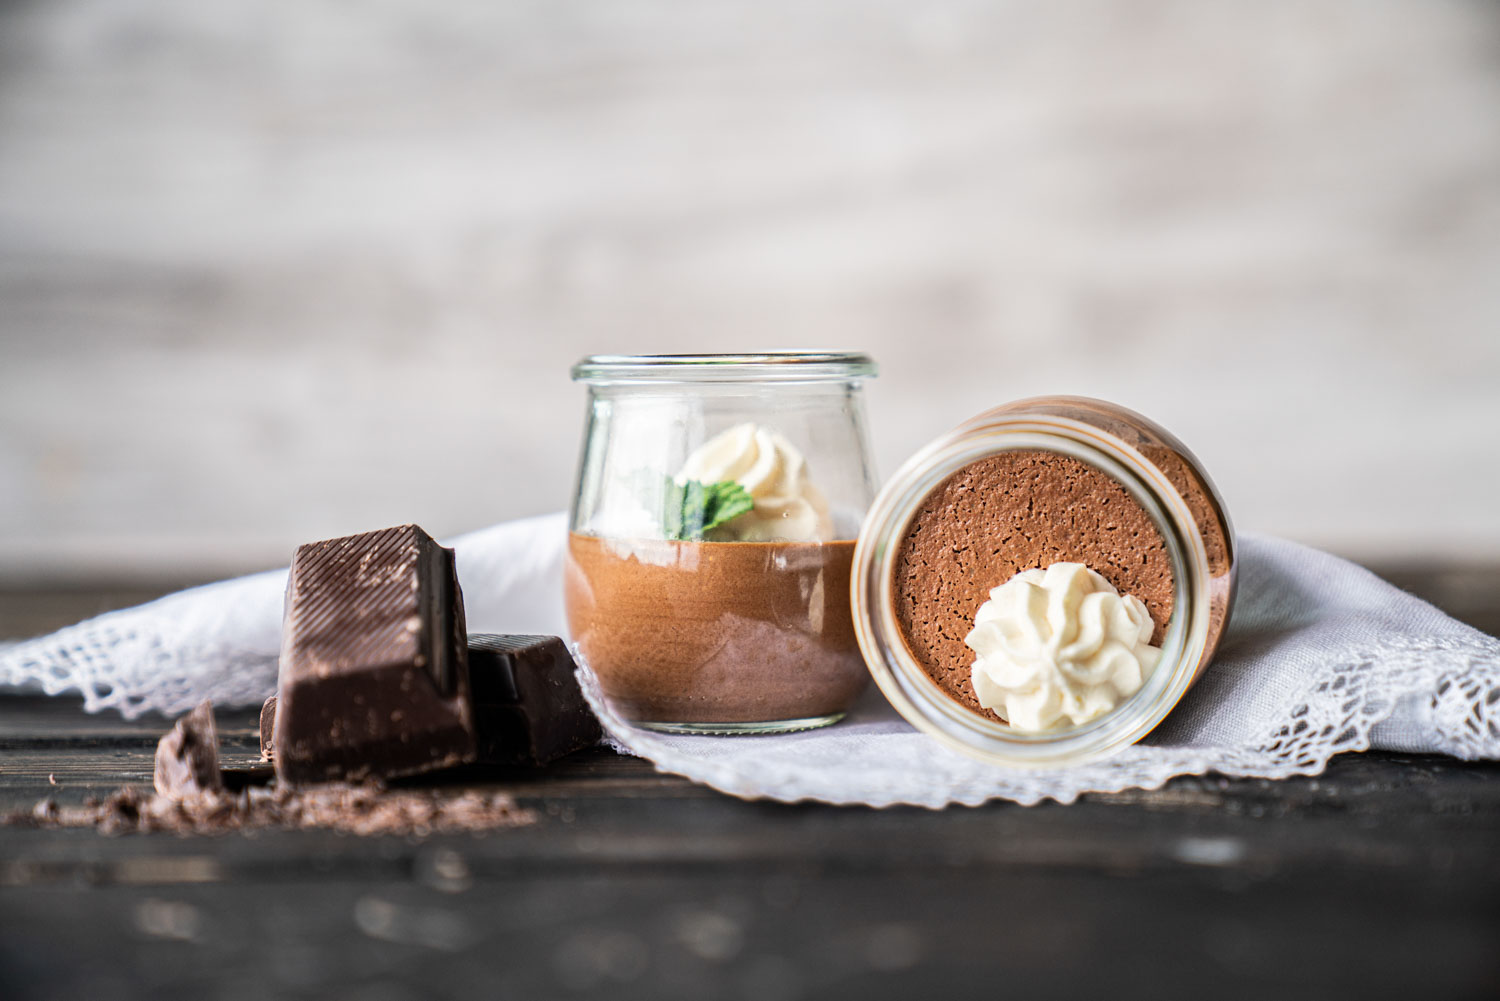 mousse-au-chocolat-ohne-ei-vegan-galileo | Sallys-Blog